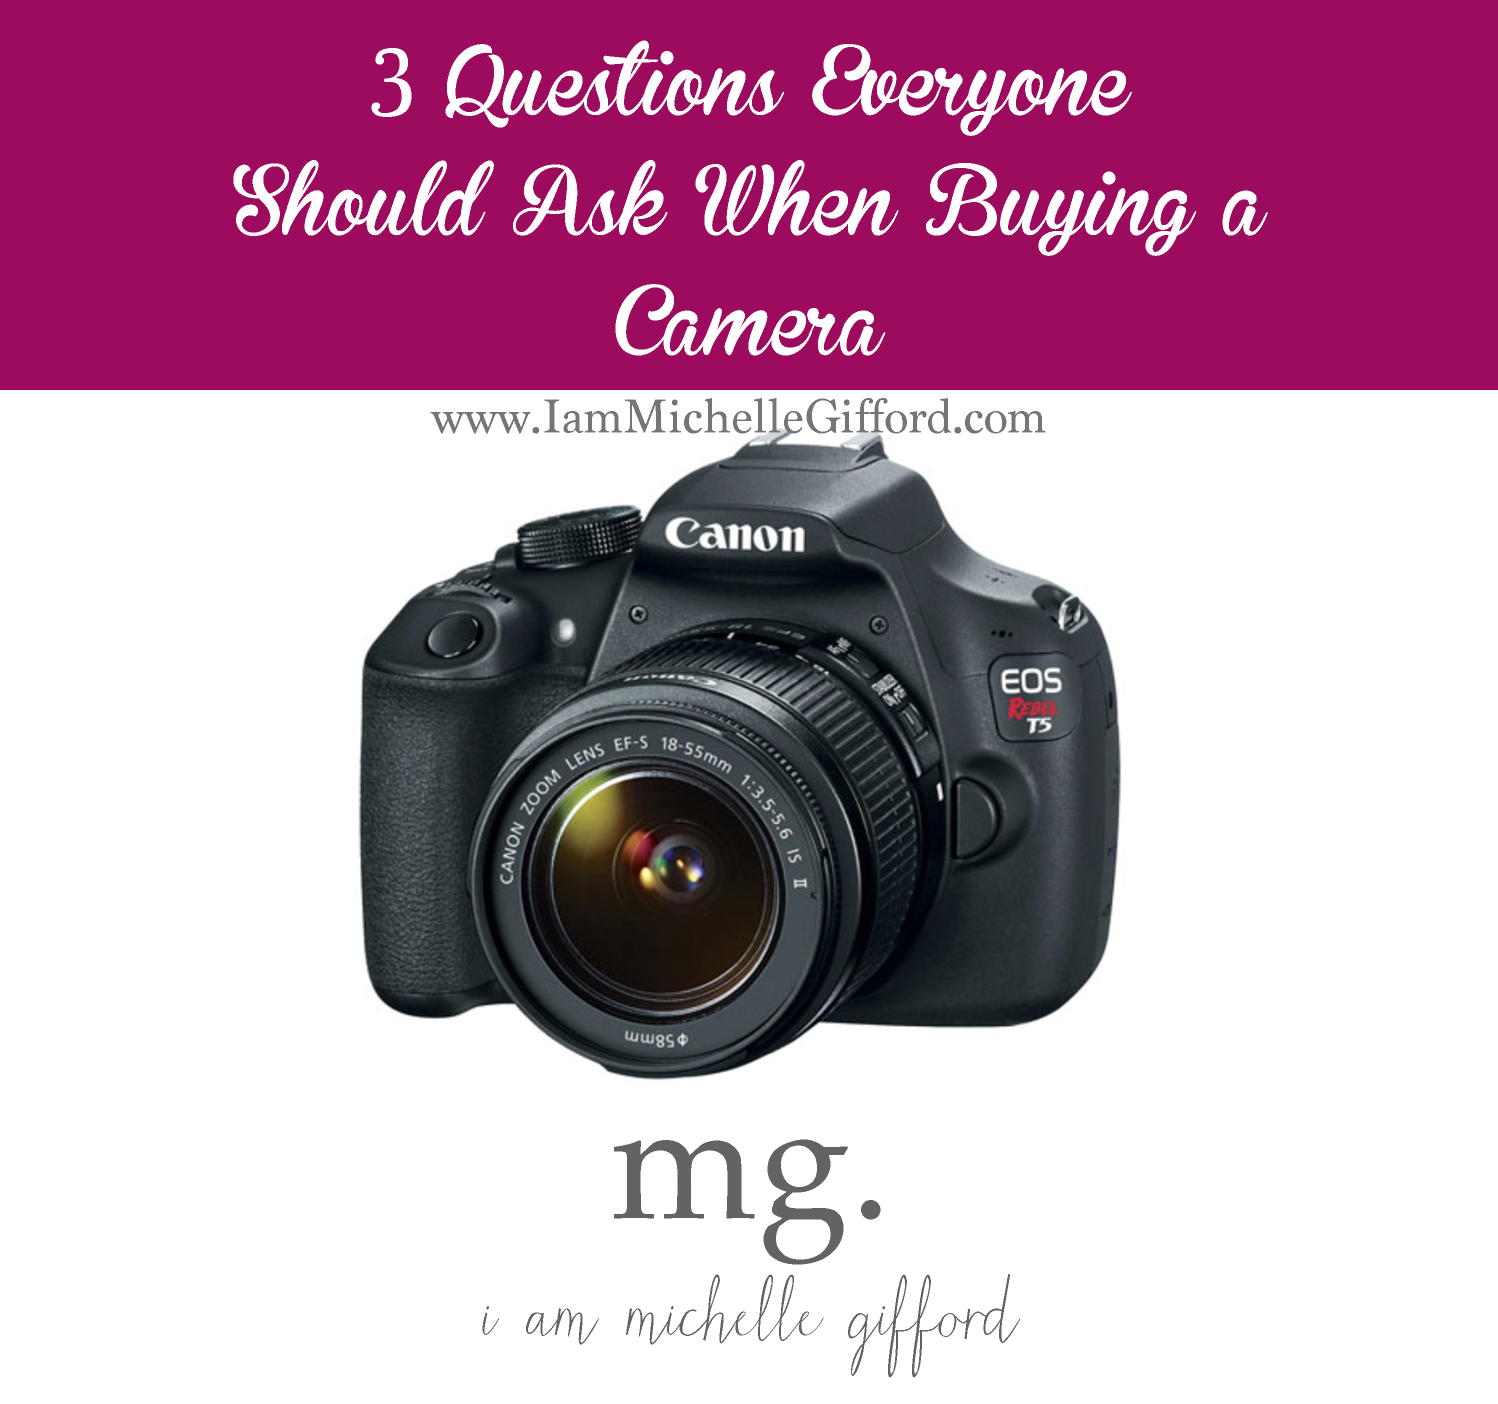 3 Questions to Ask when buying a camera. www.iammichellegifford.com